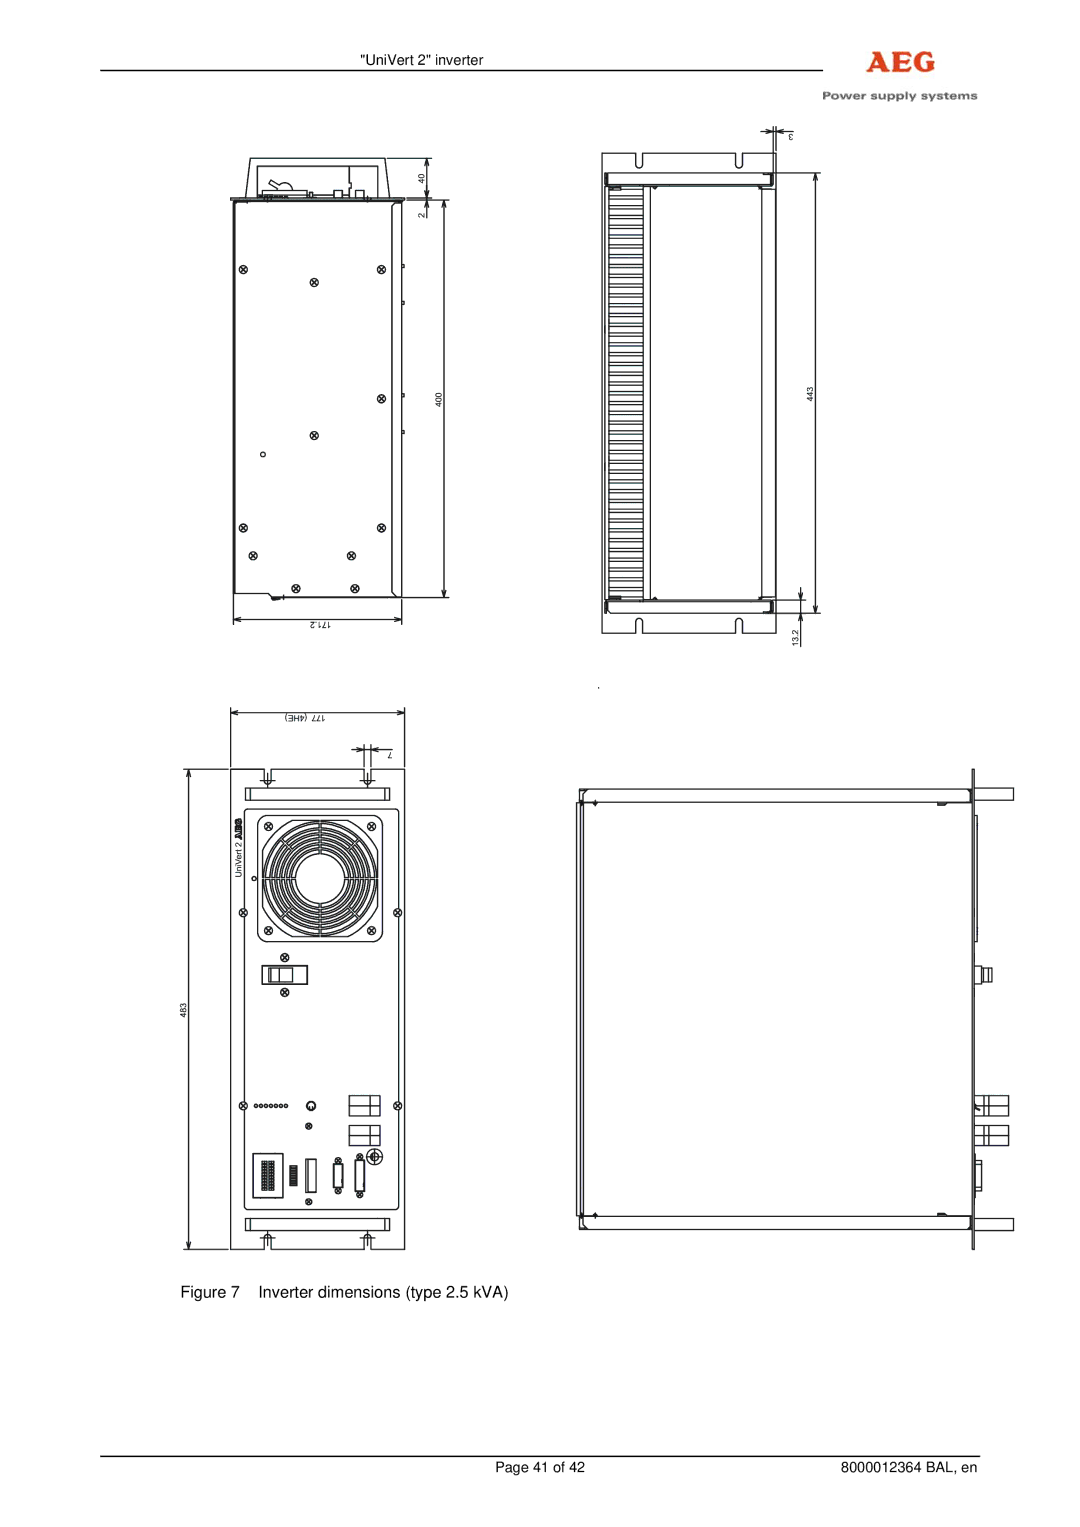 AEG 8000012364 BAL operating instructions Inverter dimensions type 2.5 kVA 